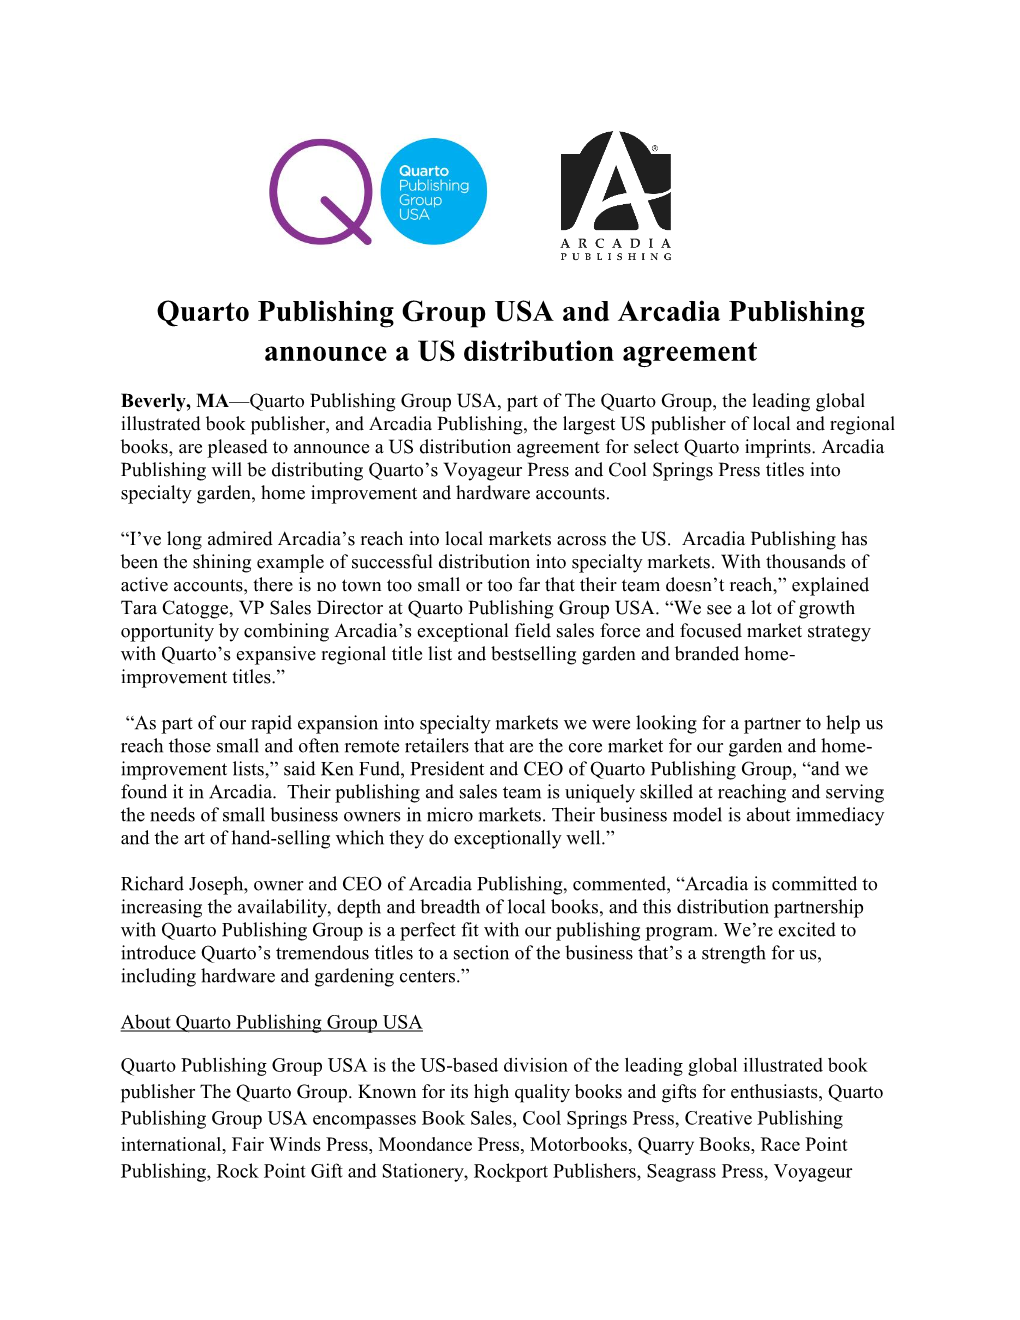 Quarto Publishing Group USA and Arcadia Publishing Announce a US Distribution Agreement